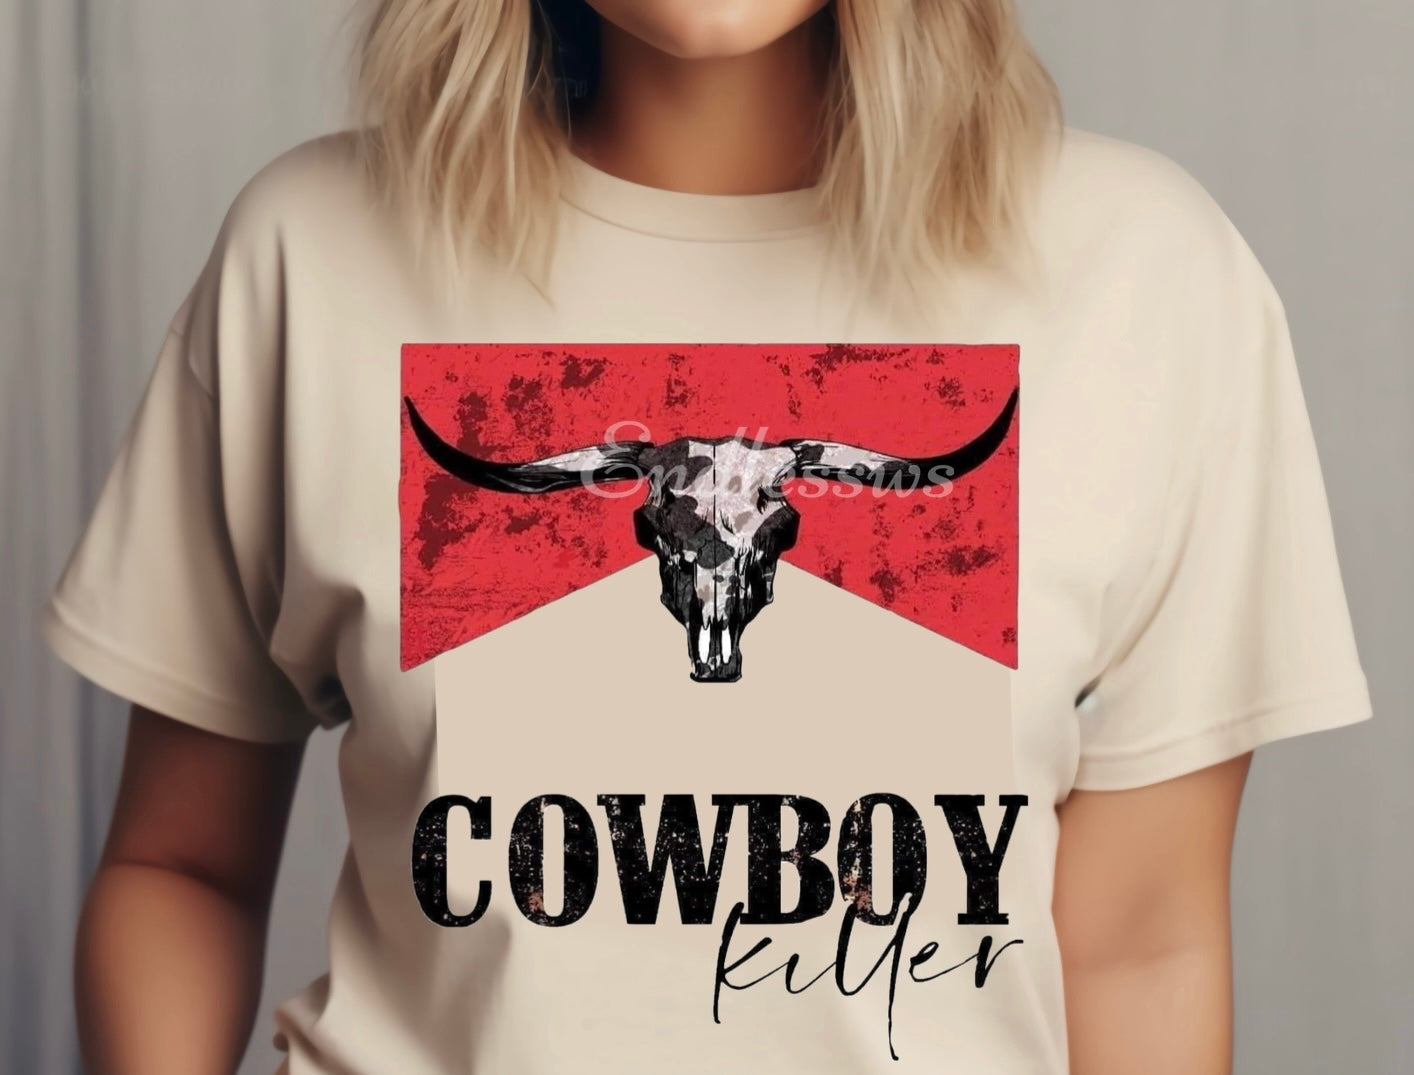 Cowboy killer tee